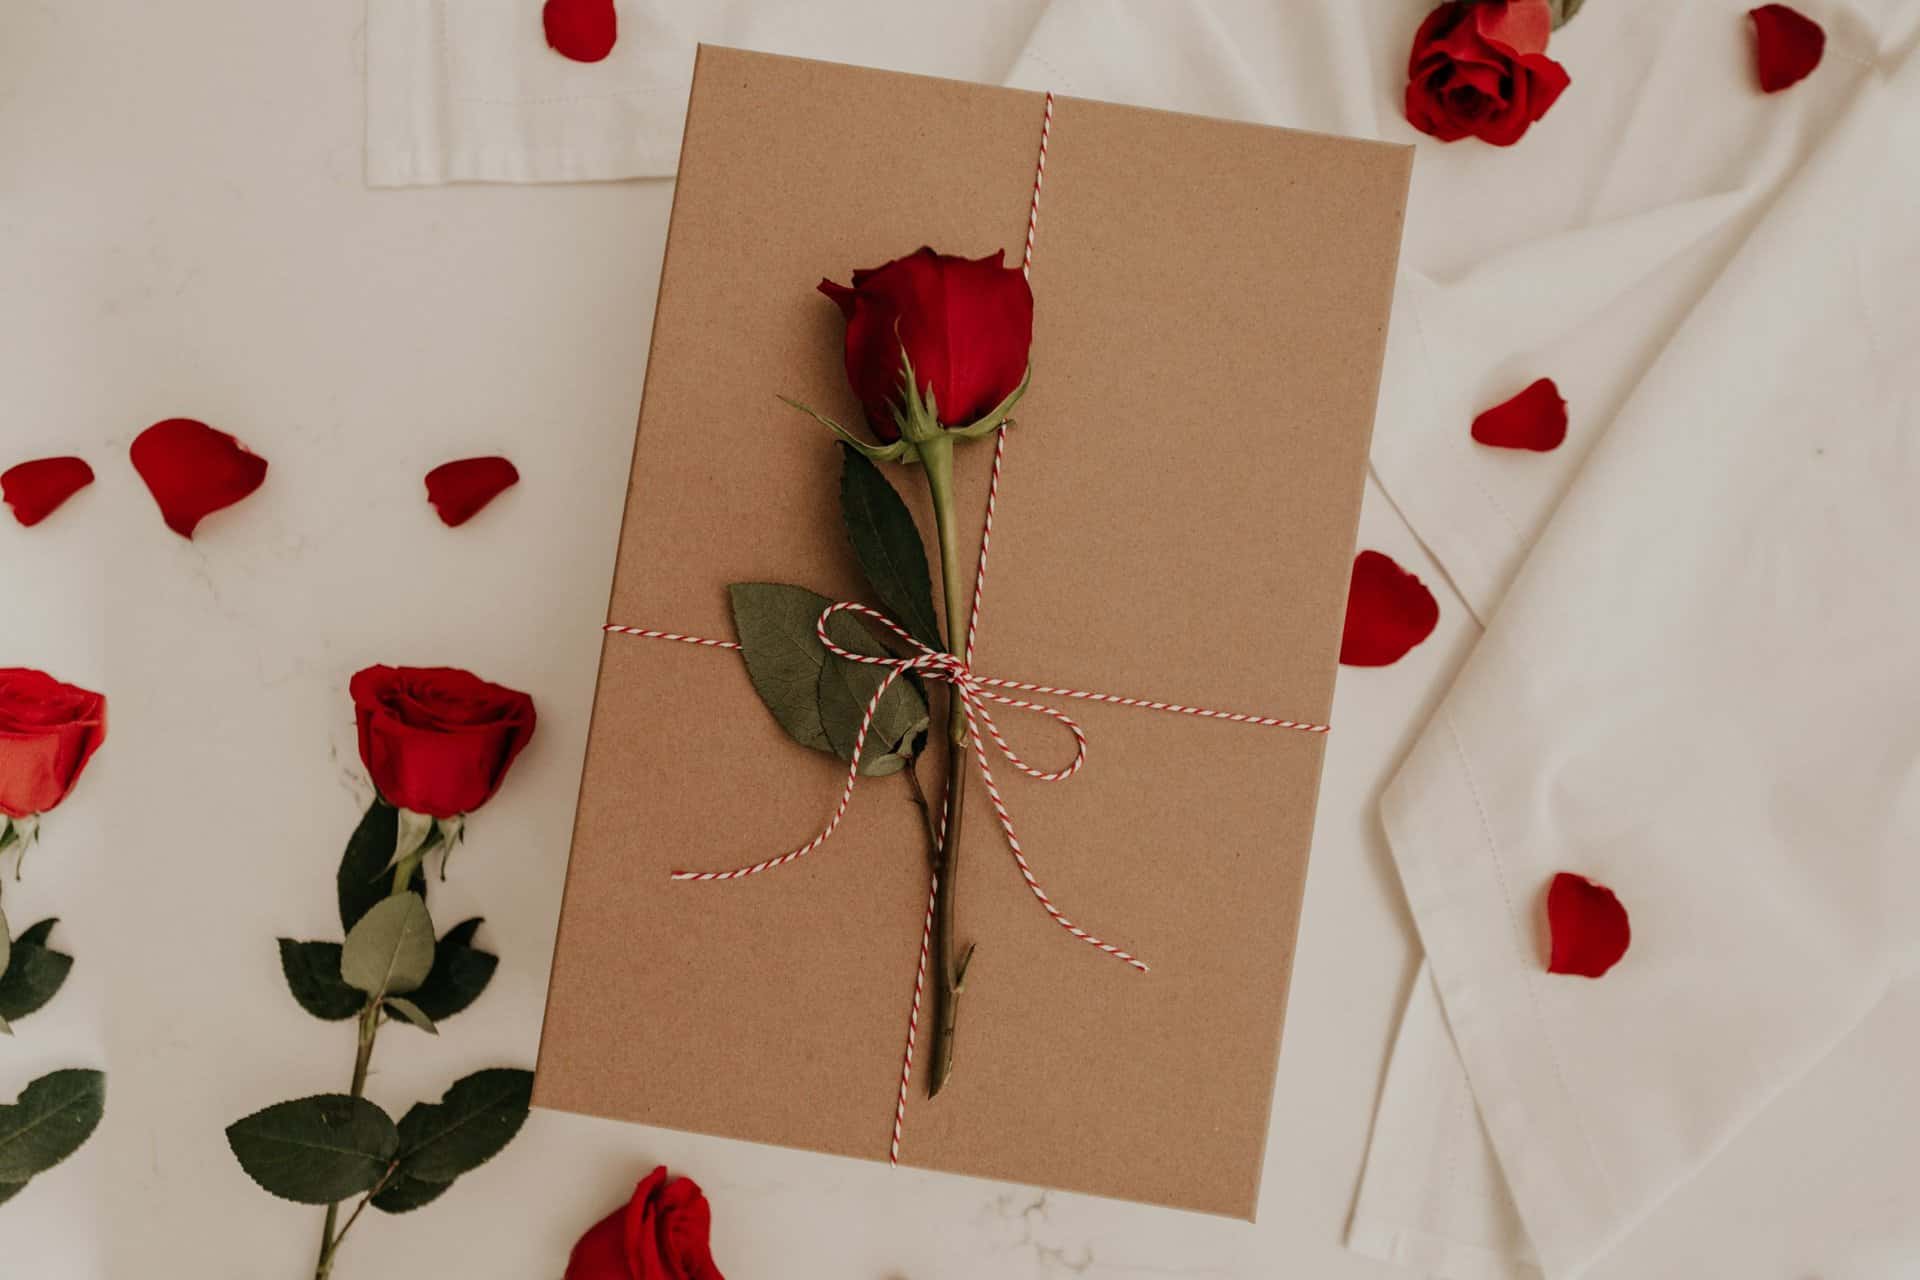 Featured image for “Listen: wedding speechwriter shares tips on romance”